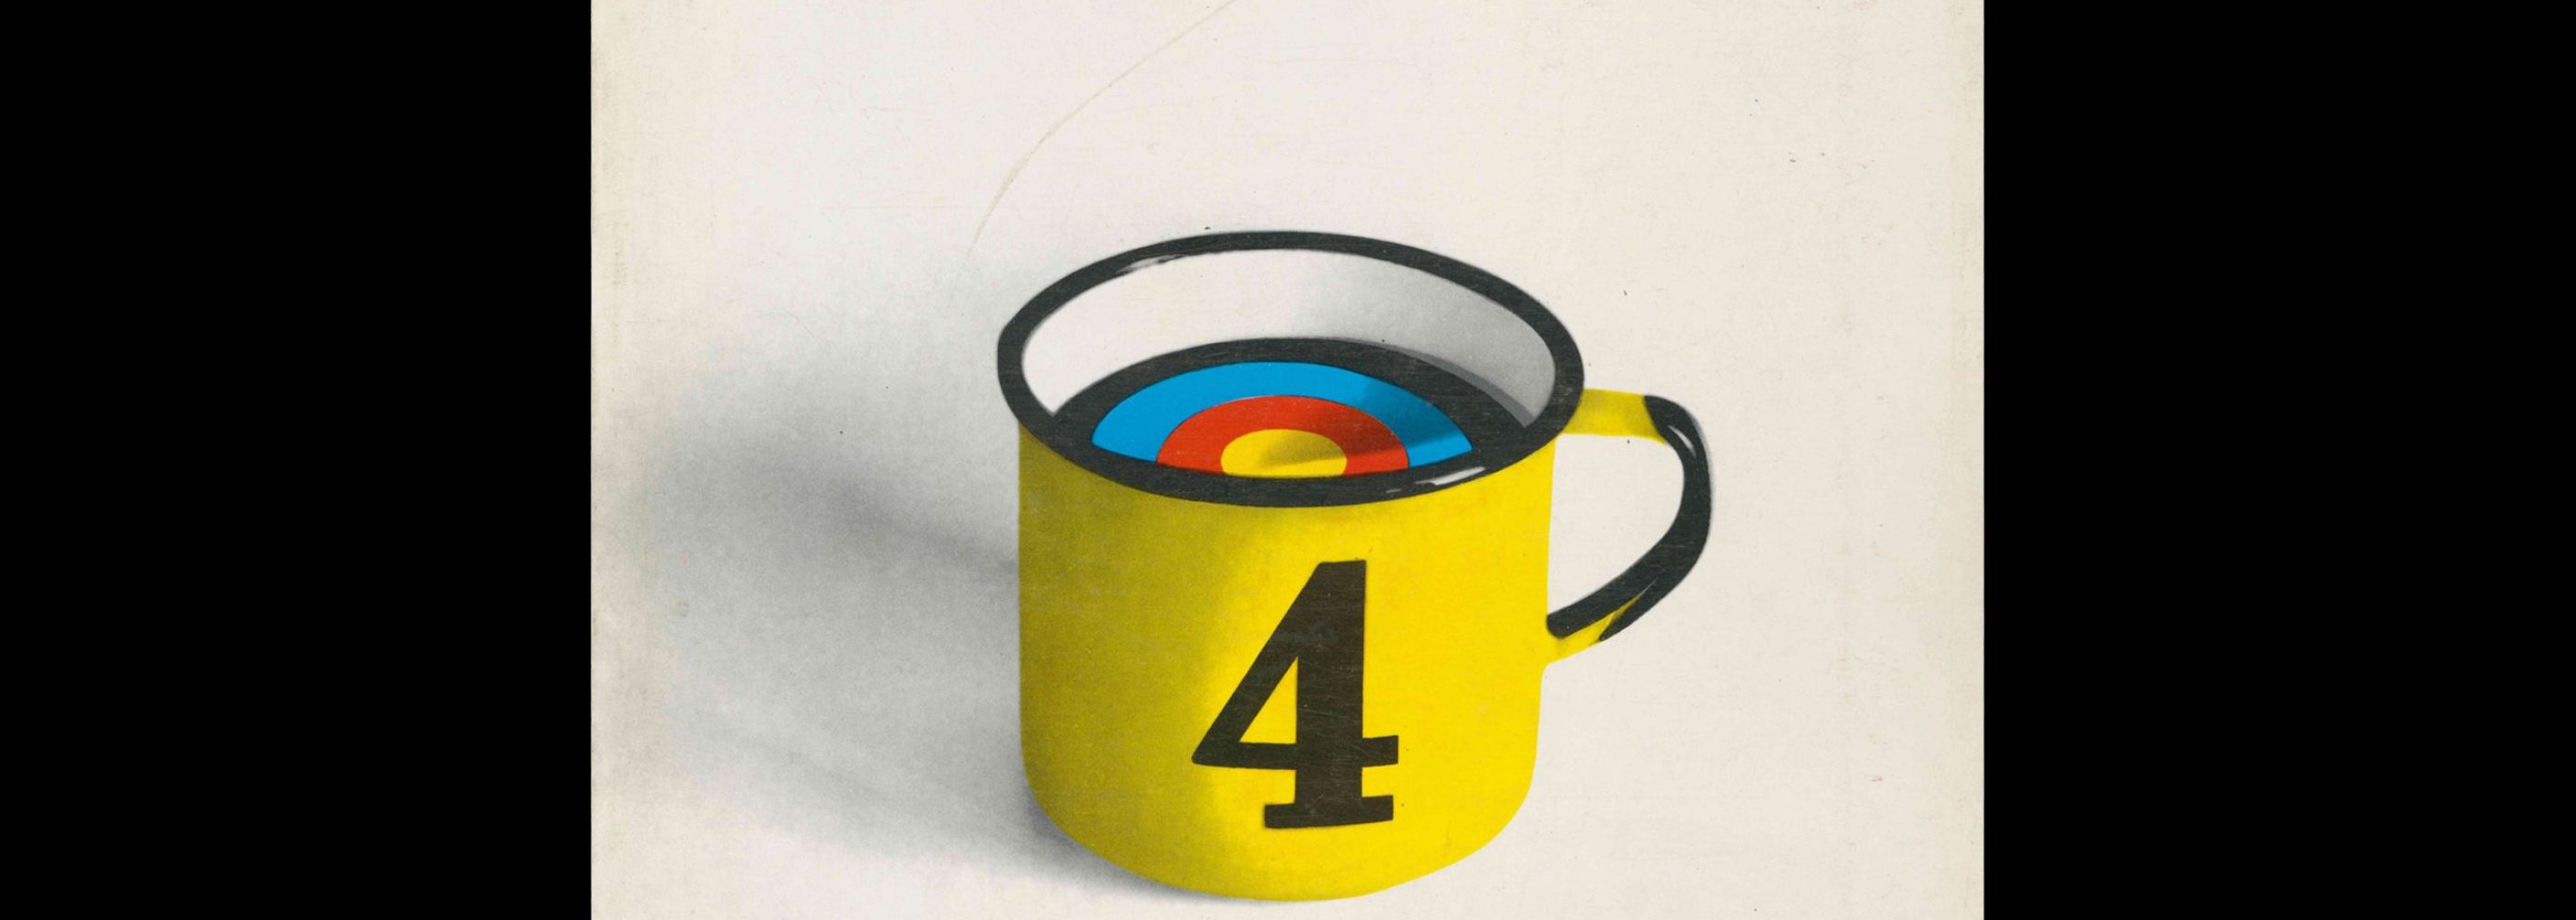 Projekt 116, 1, 1977. Cover design by Wojciech Freudenreich